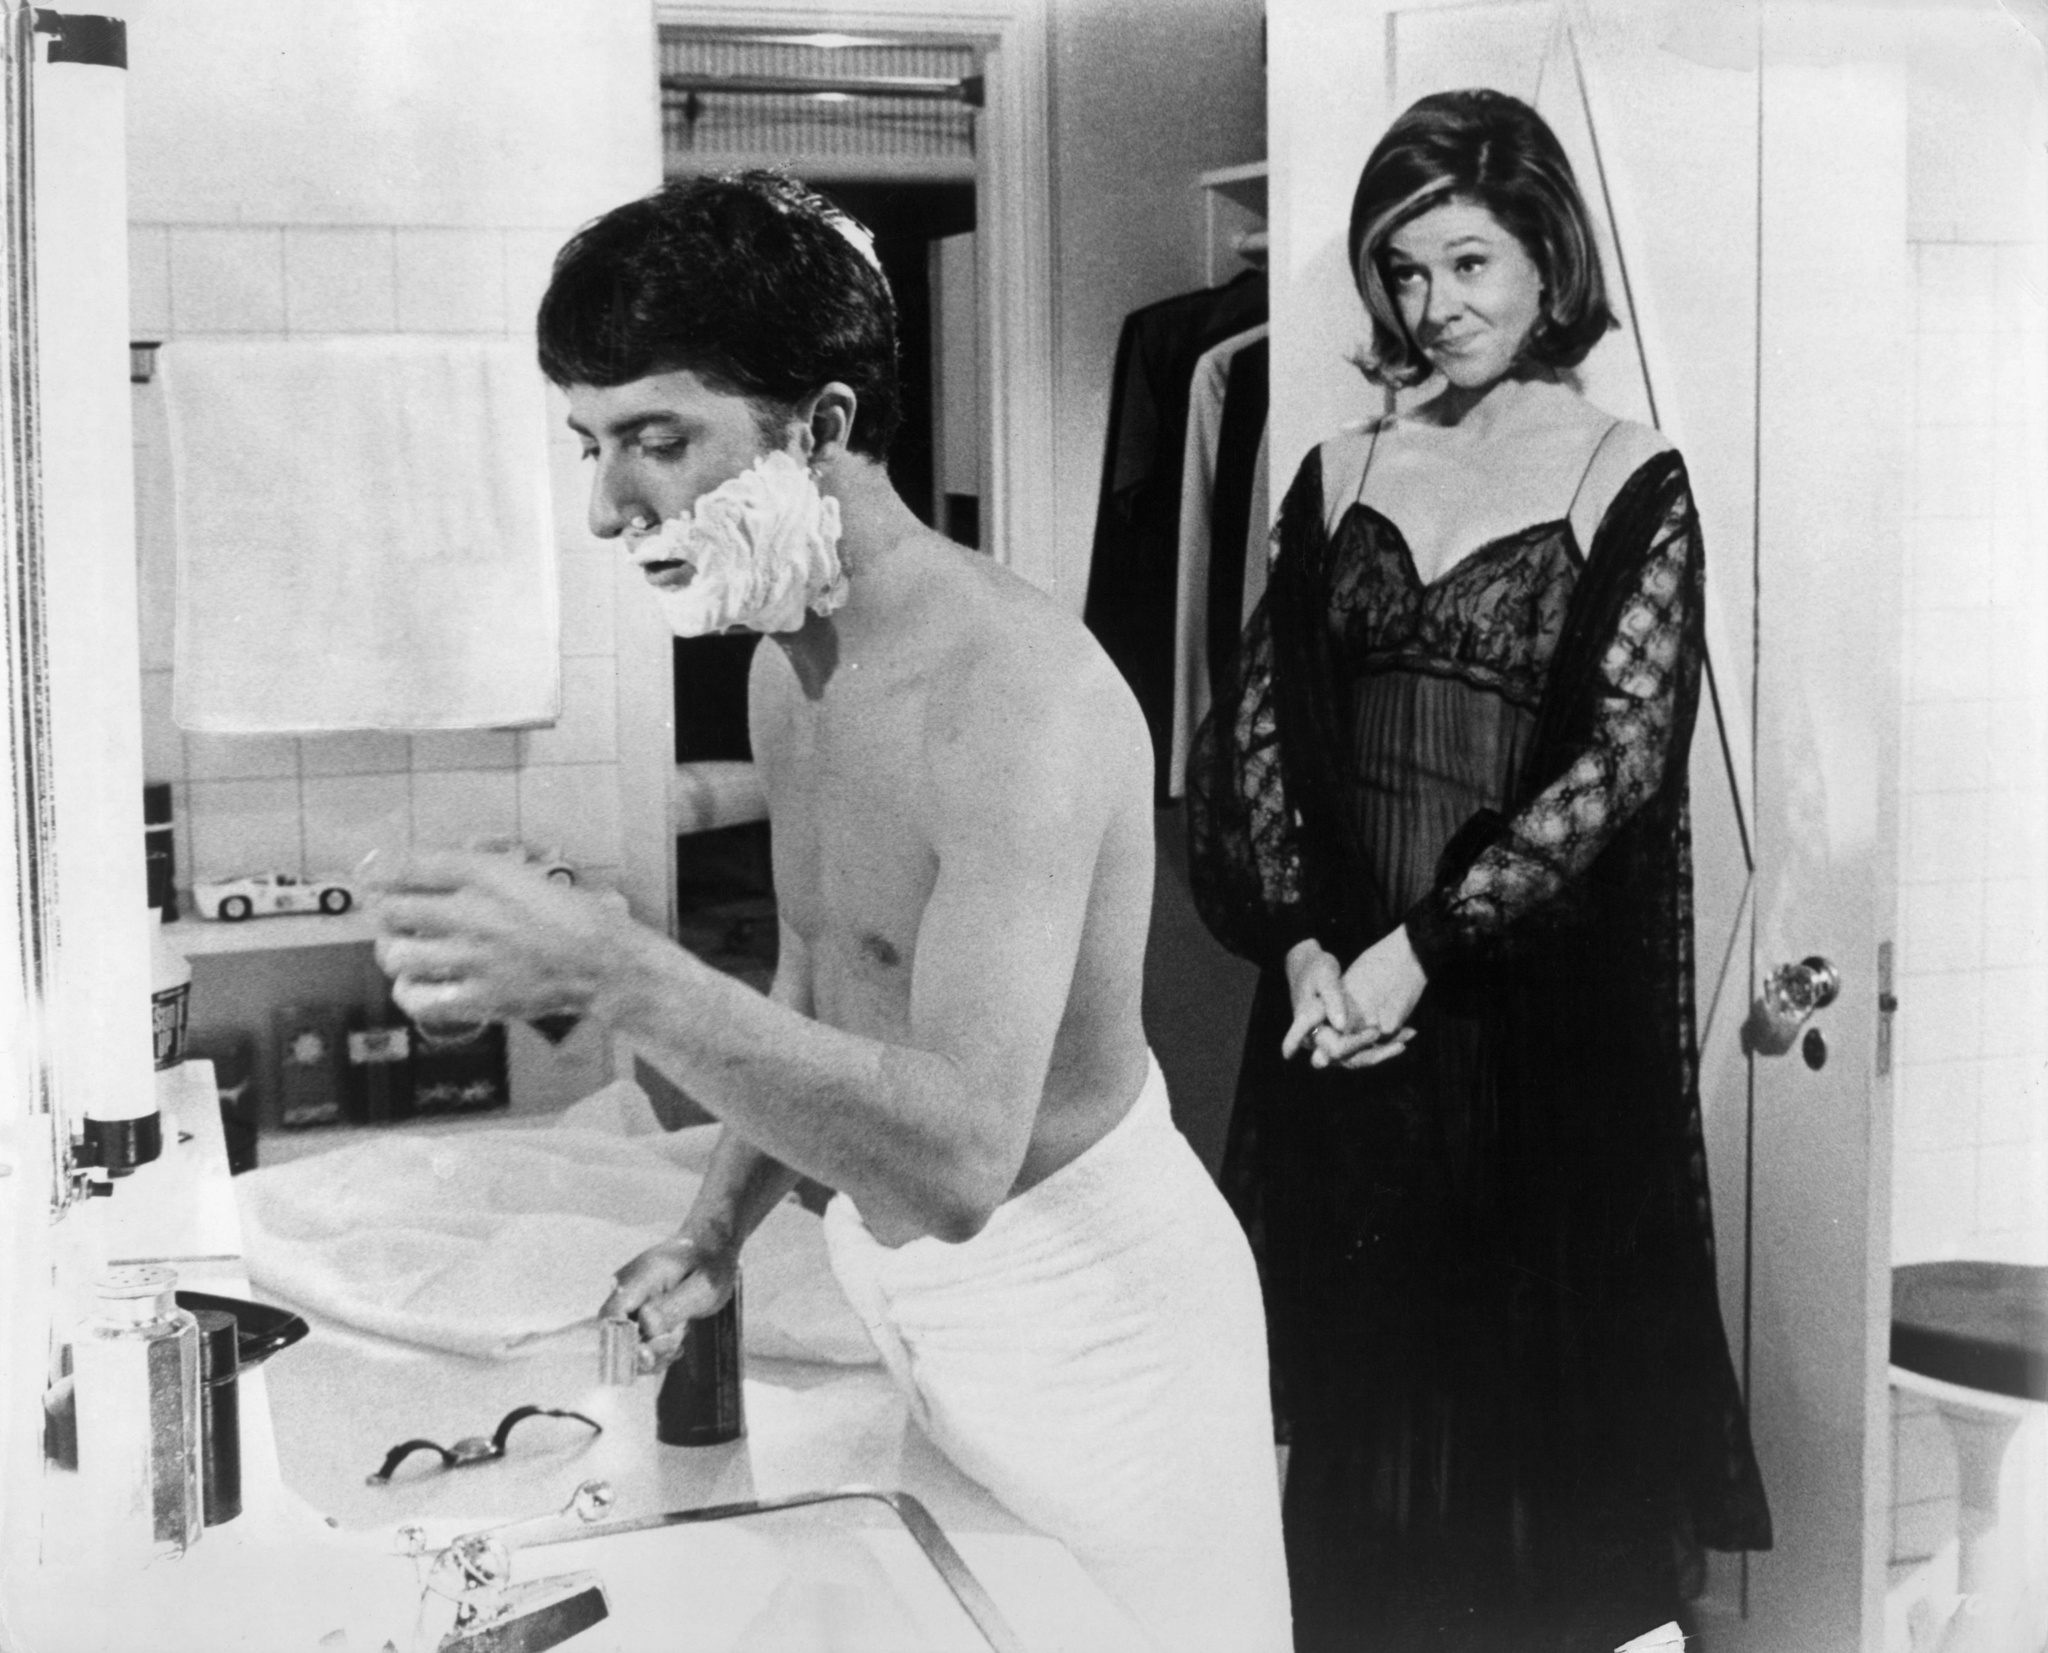 Still of Dustin Hoffman and Elizabeth Wilson in The Graduate (1967)